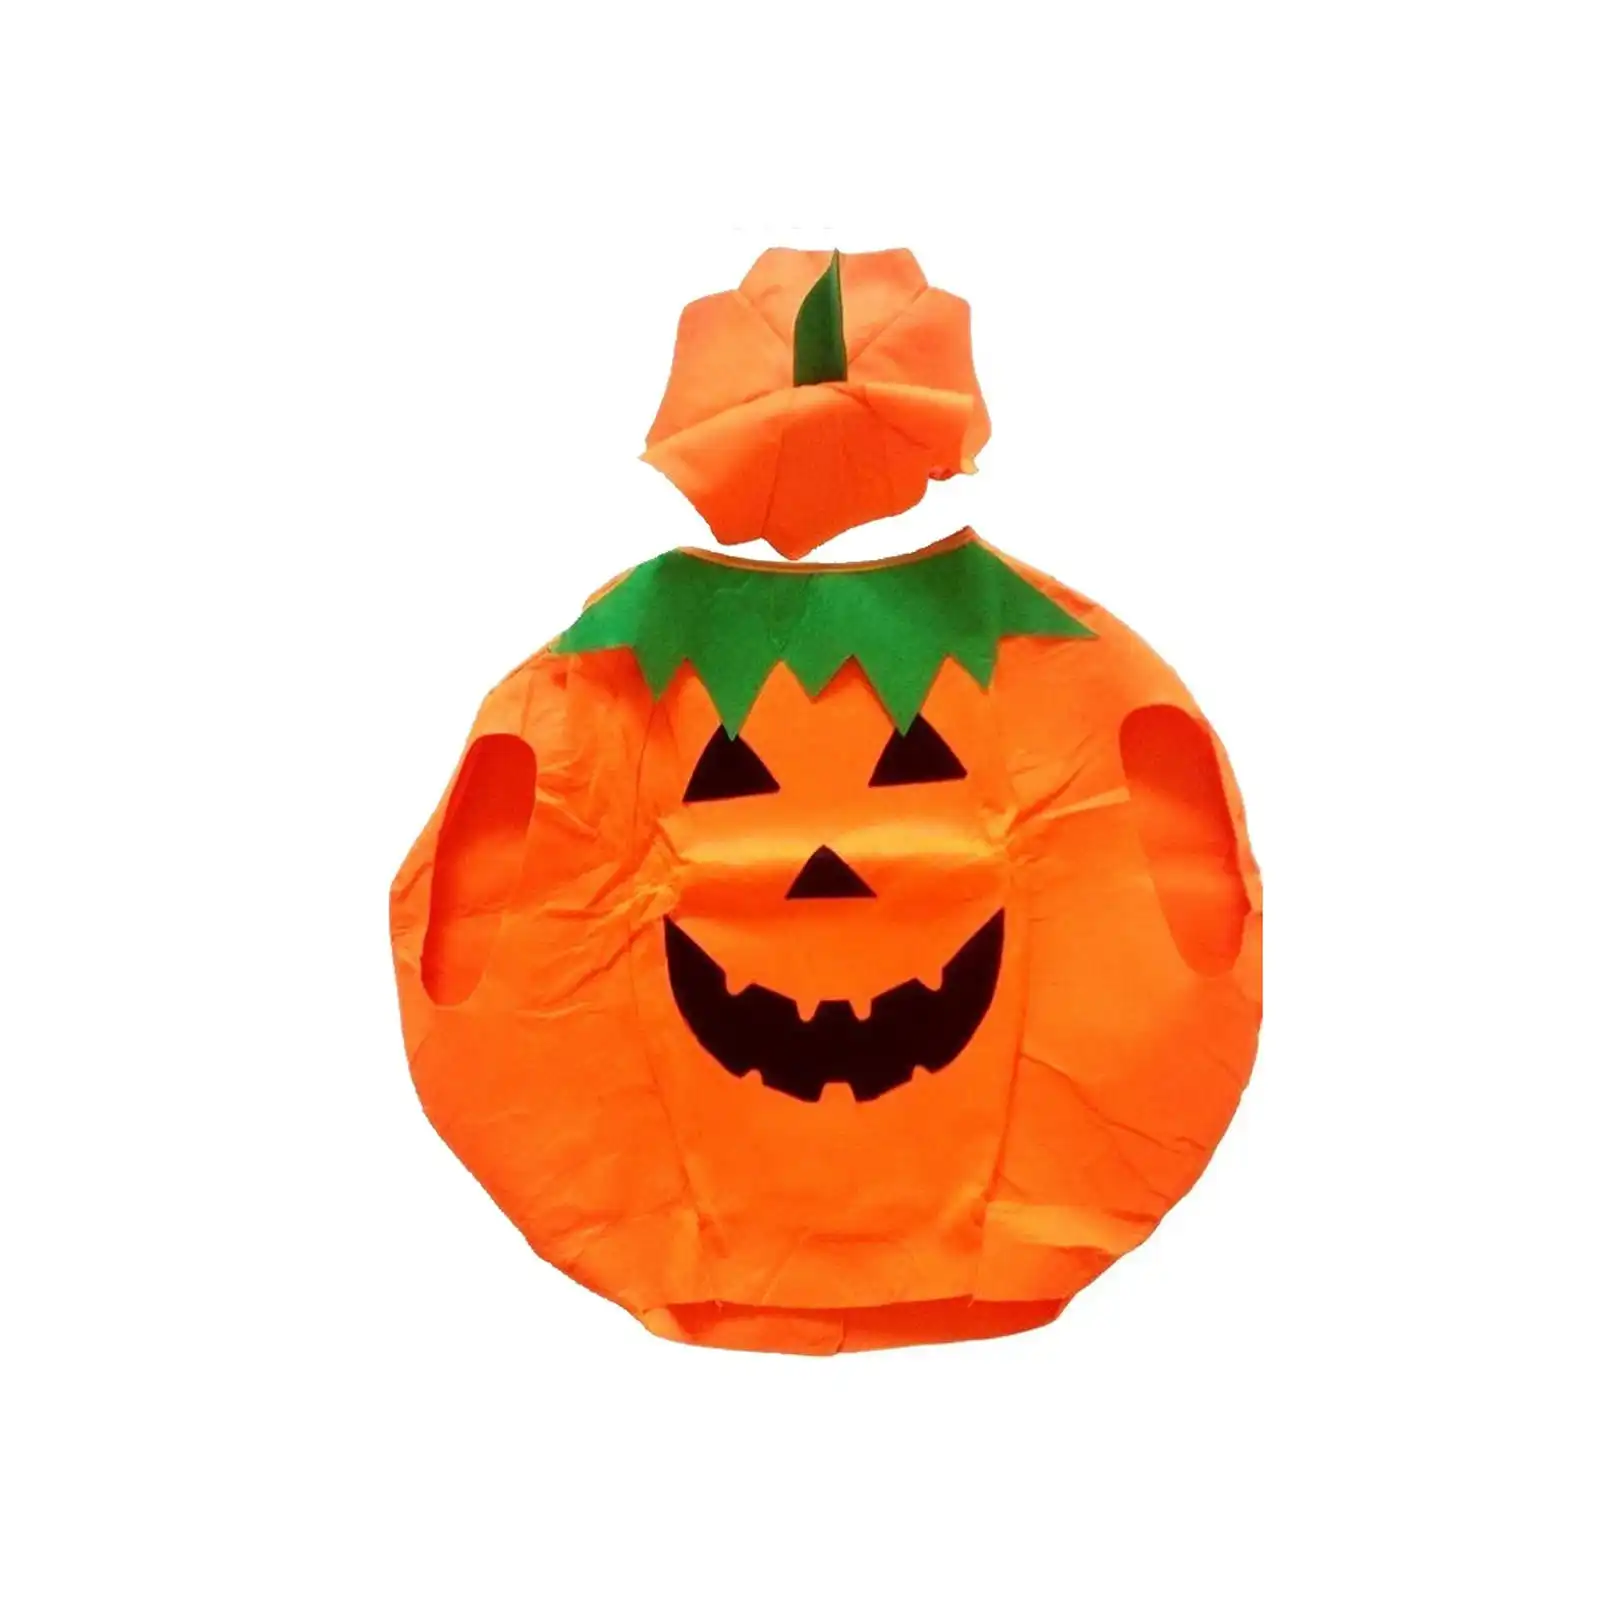 SMALL ADULT PUMPKIN COSTUME Halloween Unisex Fancy Dress Up Party Orange Vegetable